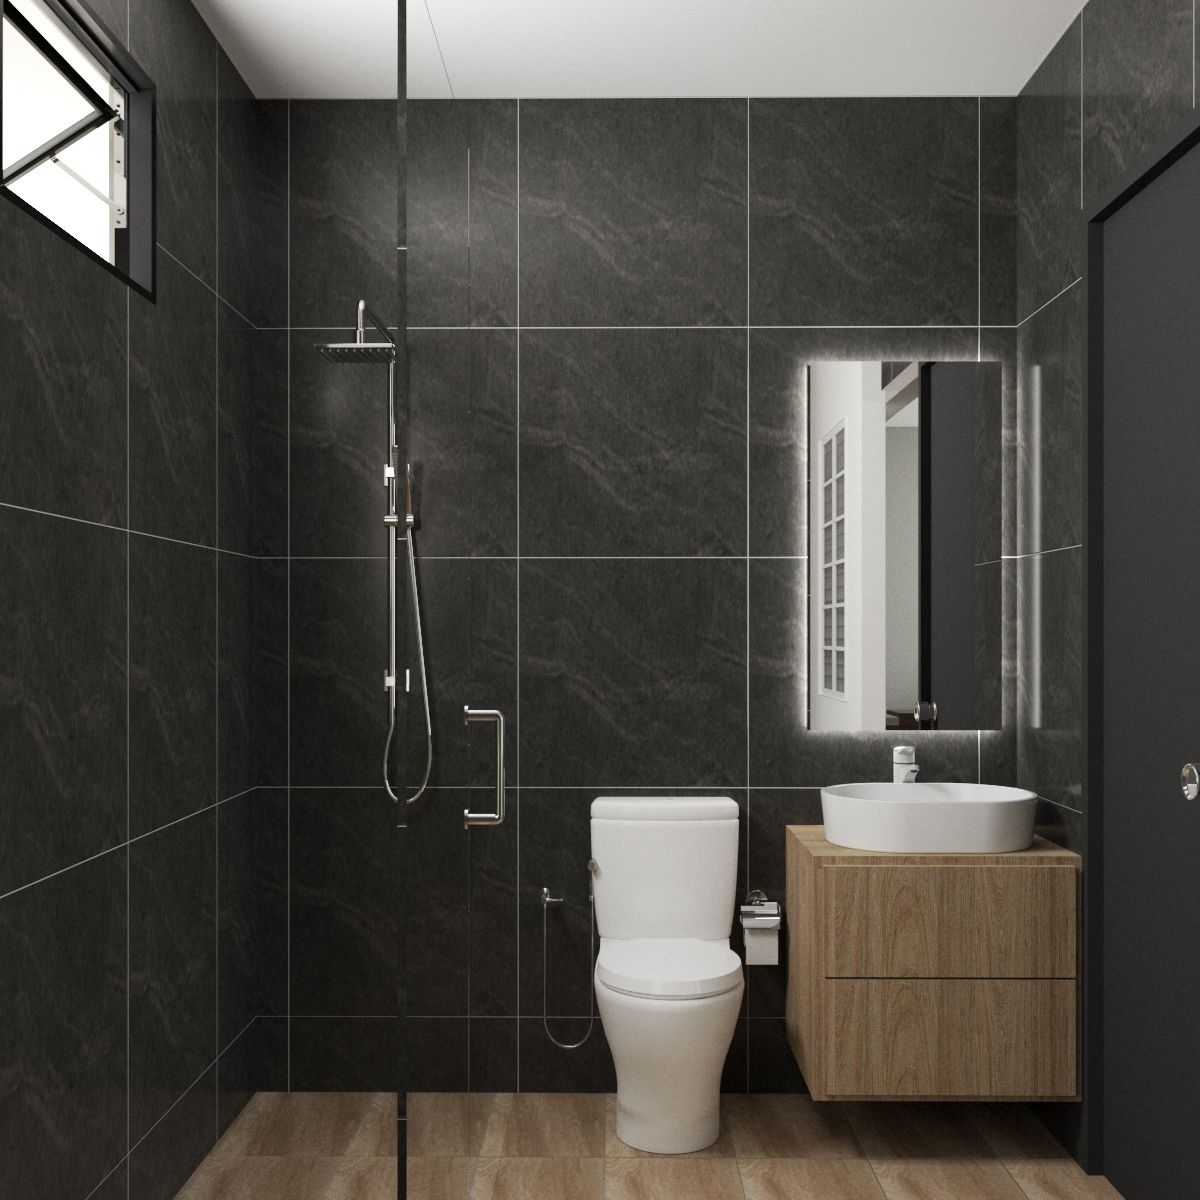 Modern Black Bathroom Design With Contrast Wooden Flooring